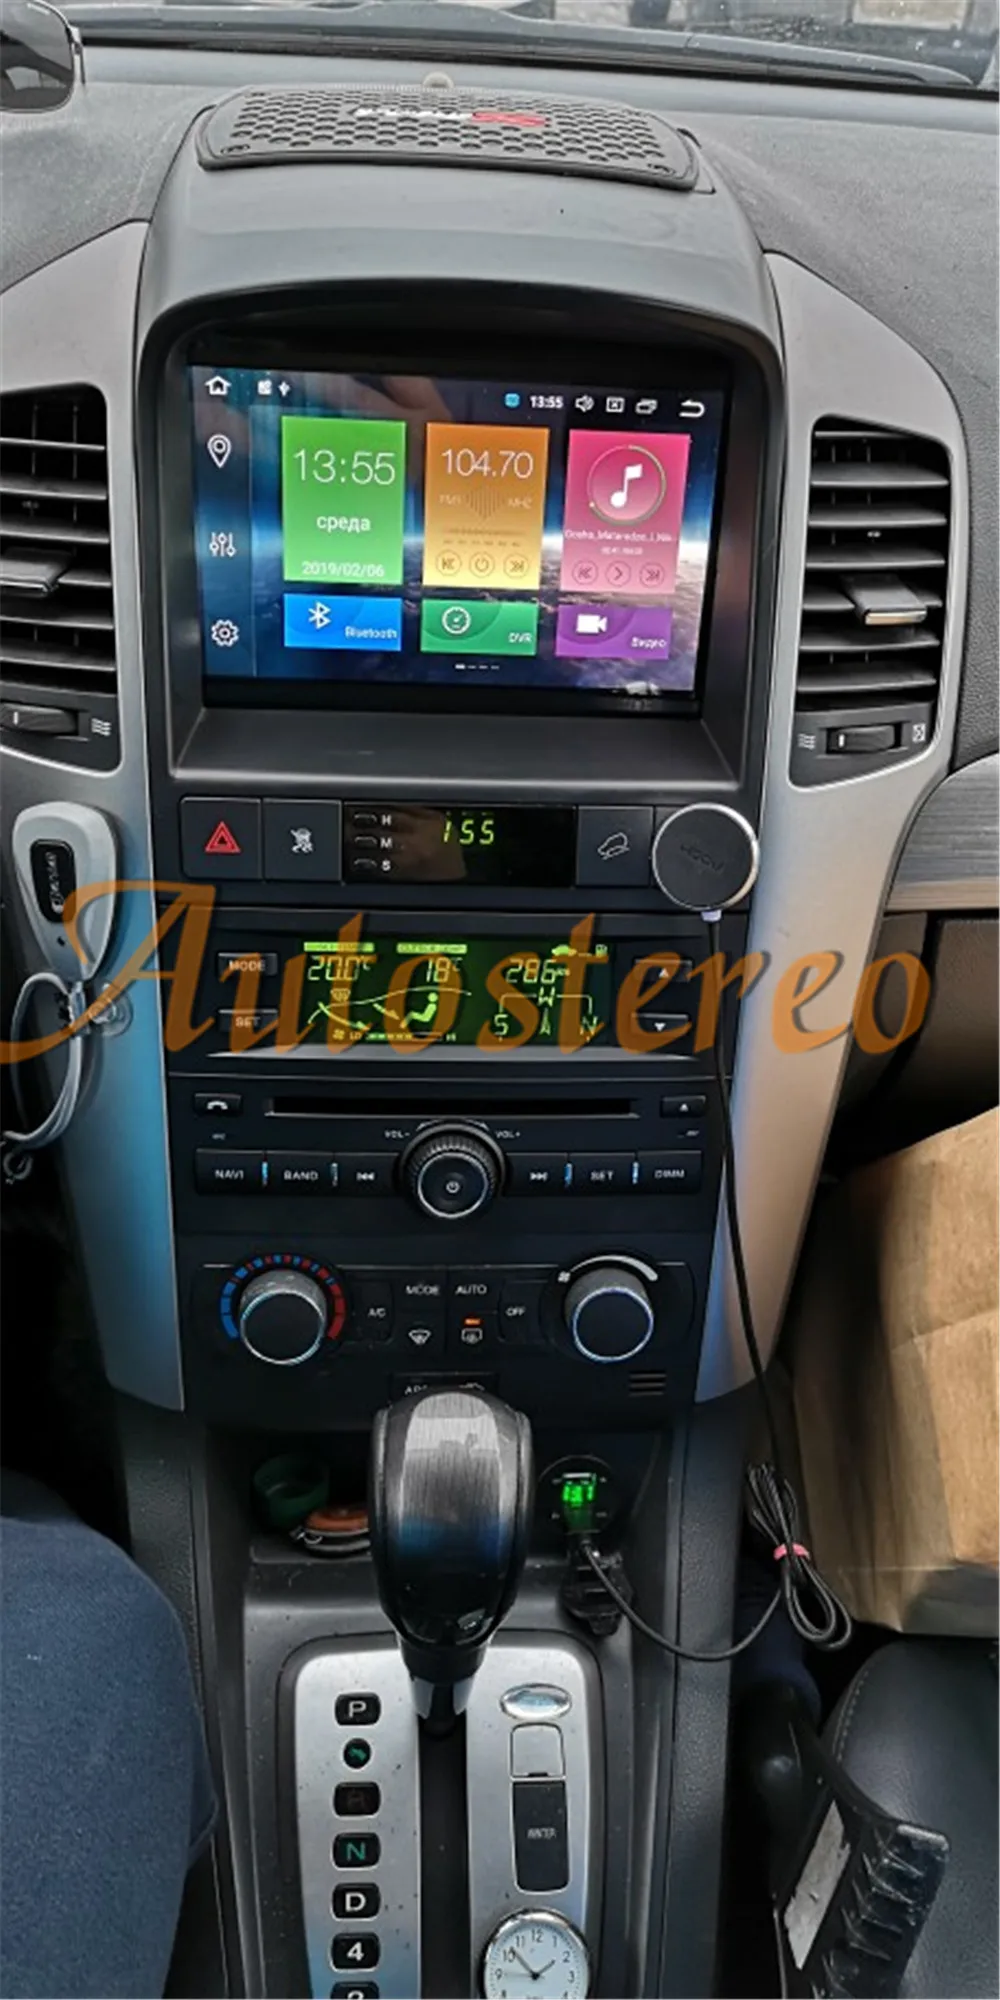 Sale Android 9 Car CD DVD player AutoStereo GPS navigation for CHEVROLET CAPTIVA 2012+ multimedia Satnav headunit radio tape recorder 4